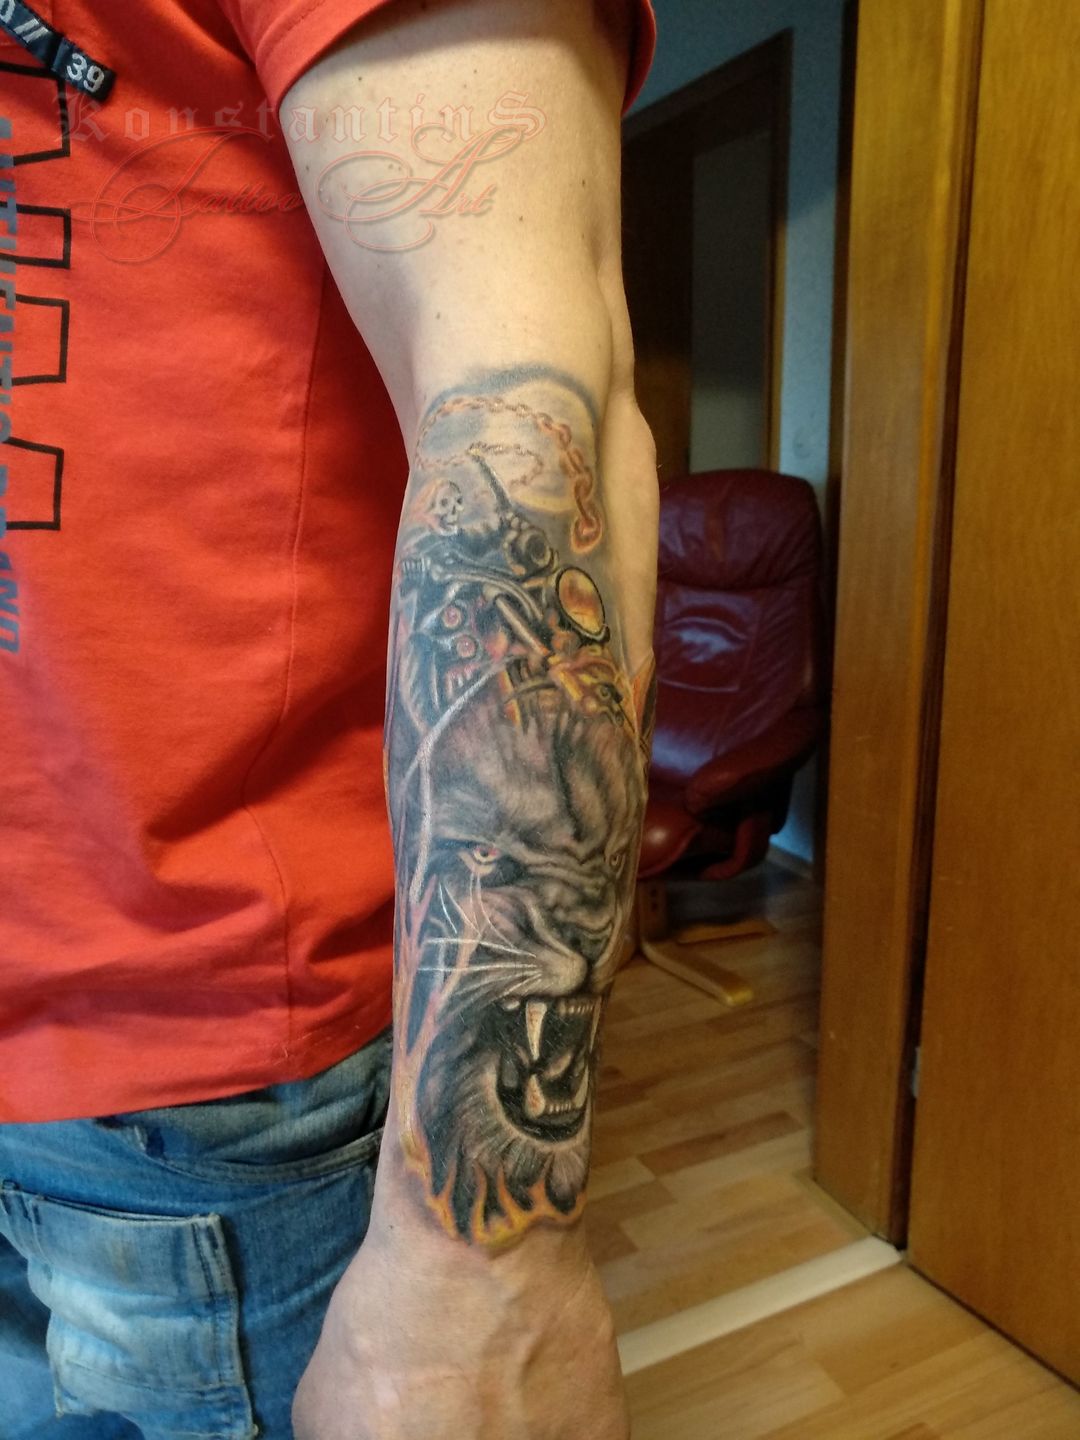 Tattoo uploaded by Robert Davies • Ghost Rider Tattoo by Sulhong Tattooer  #ghostrider #marvelcomics #johnnyblaze #comicbook #marvel #heroes  #SulhongTattooer • Tattoodo